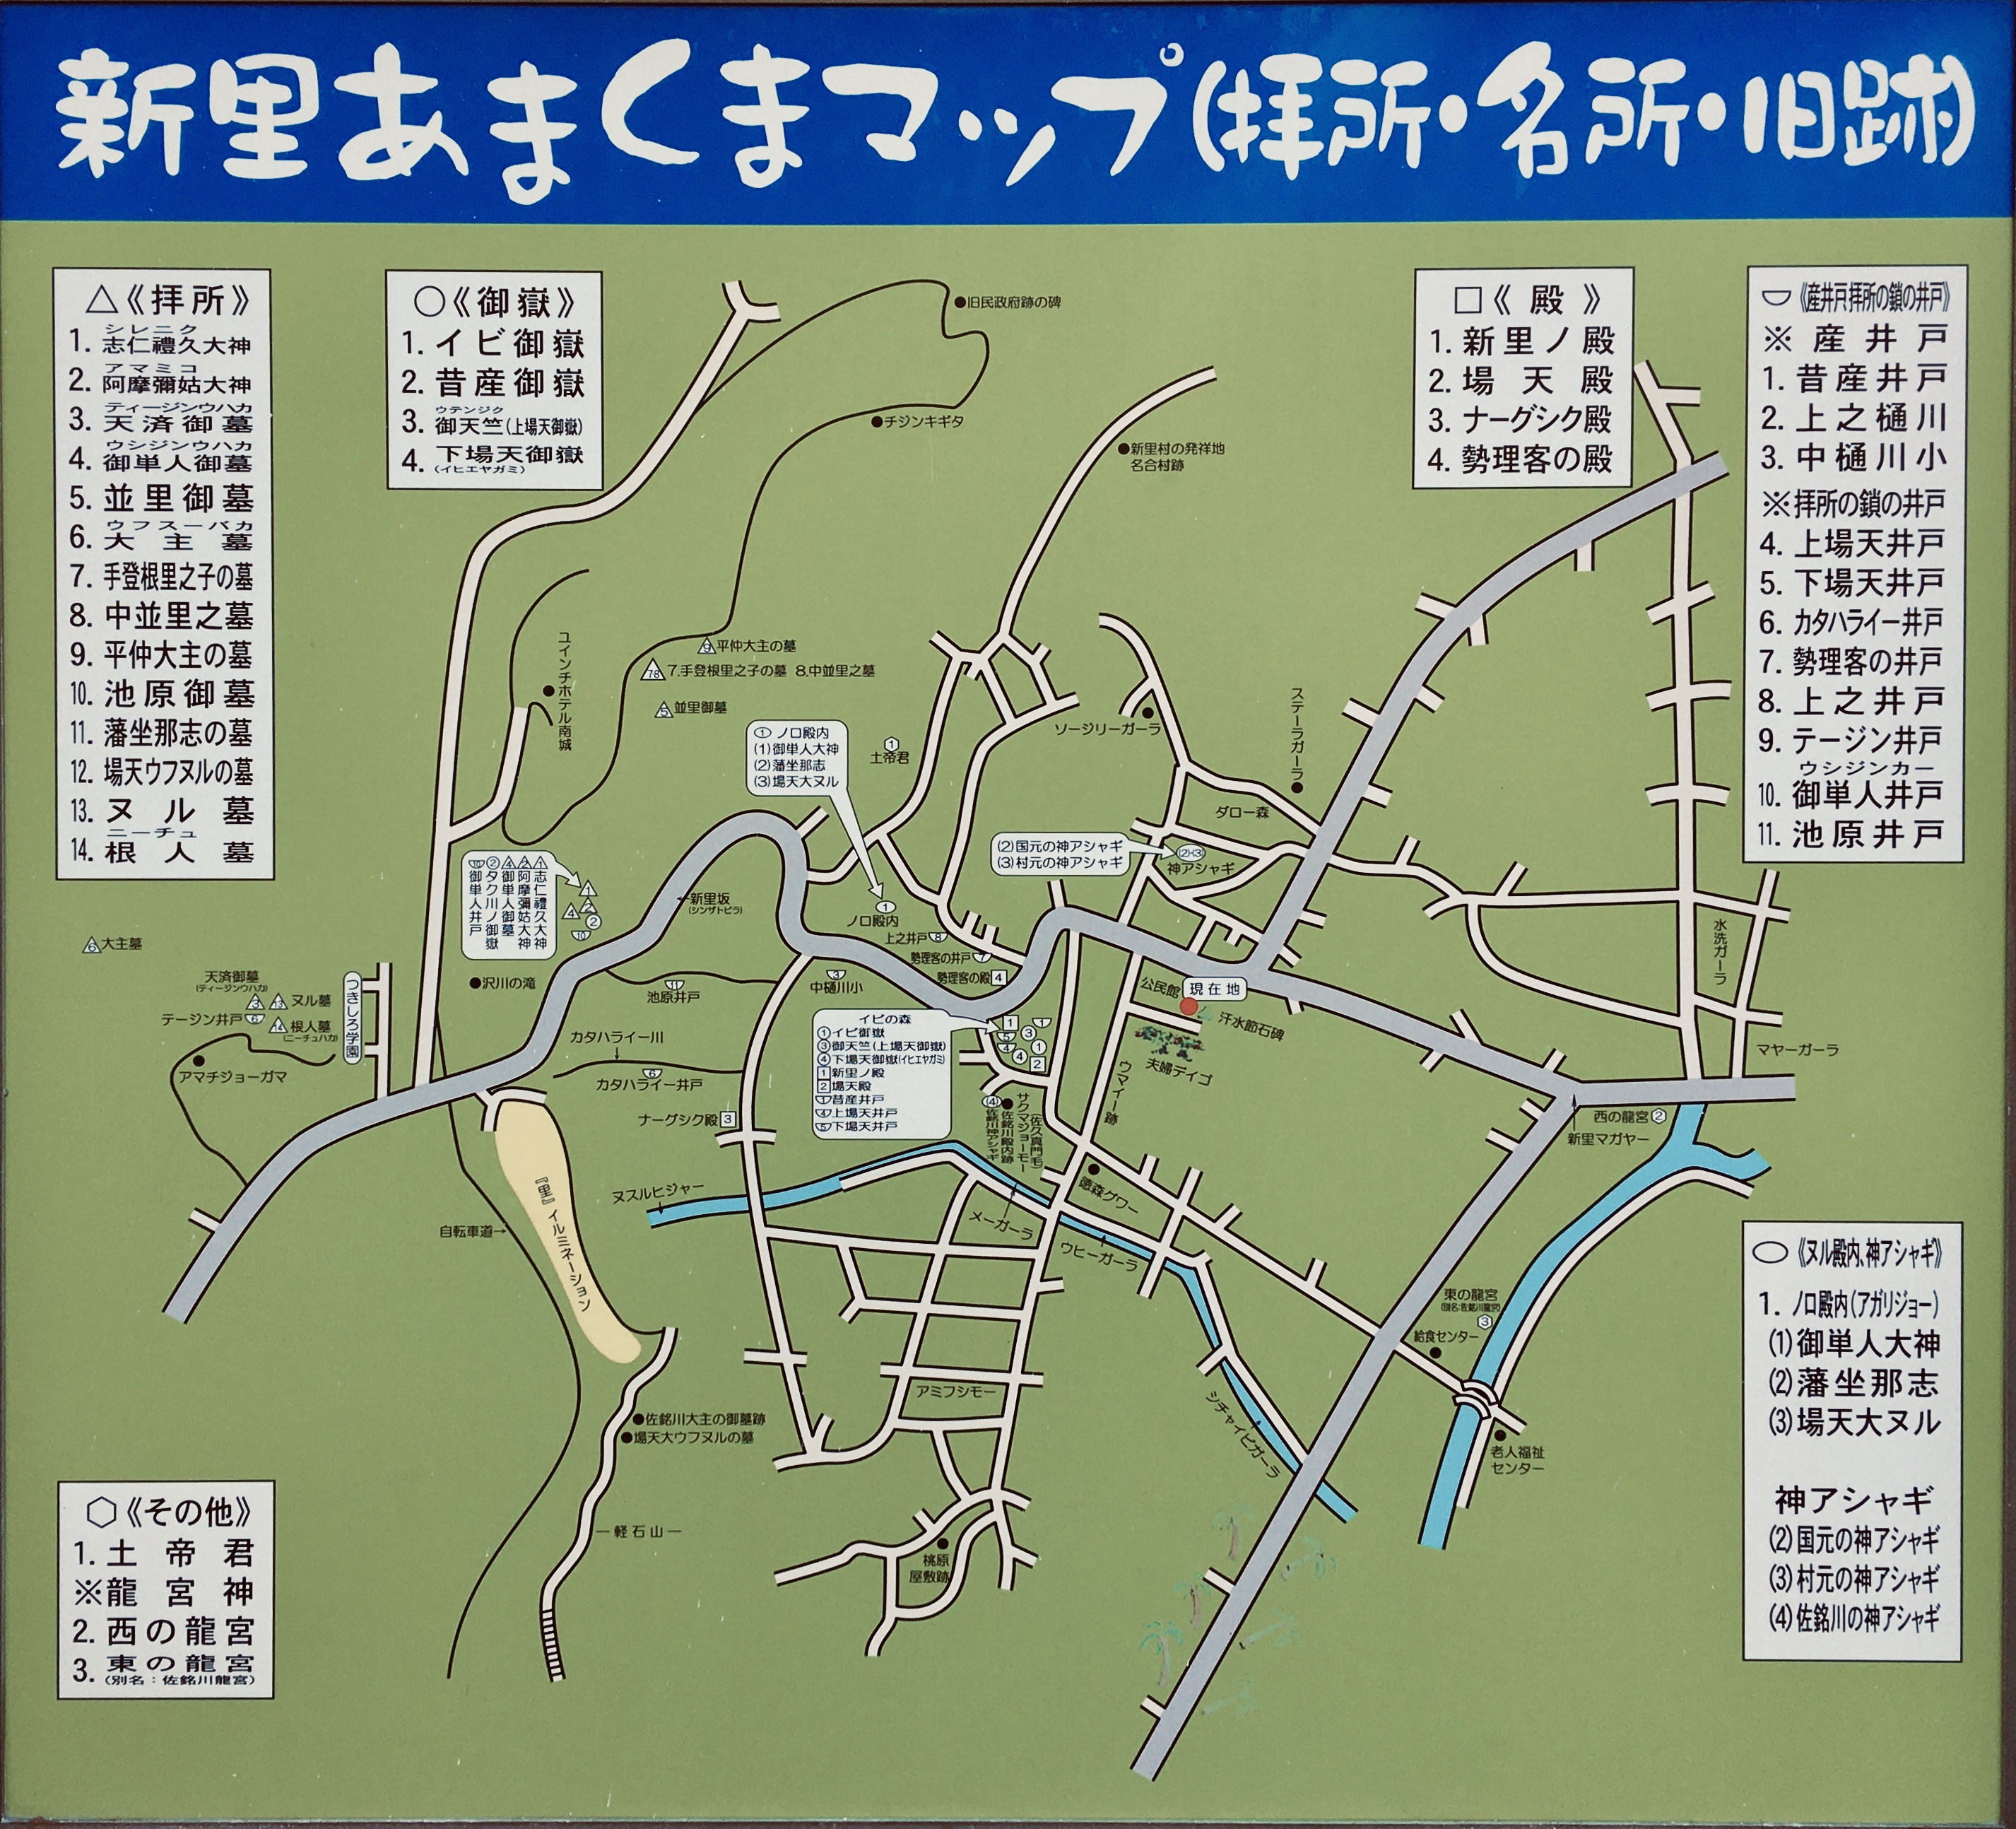 Okinawa 沖縄 #2 Day 143 (09/11/21) 旧佐敷村 (3) Shinzato Hamlet 